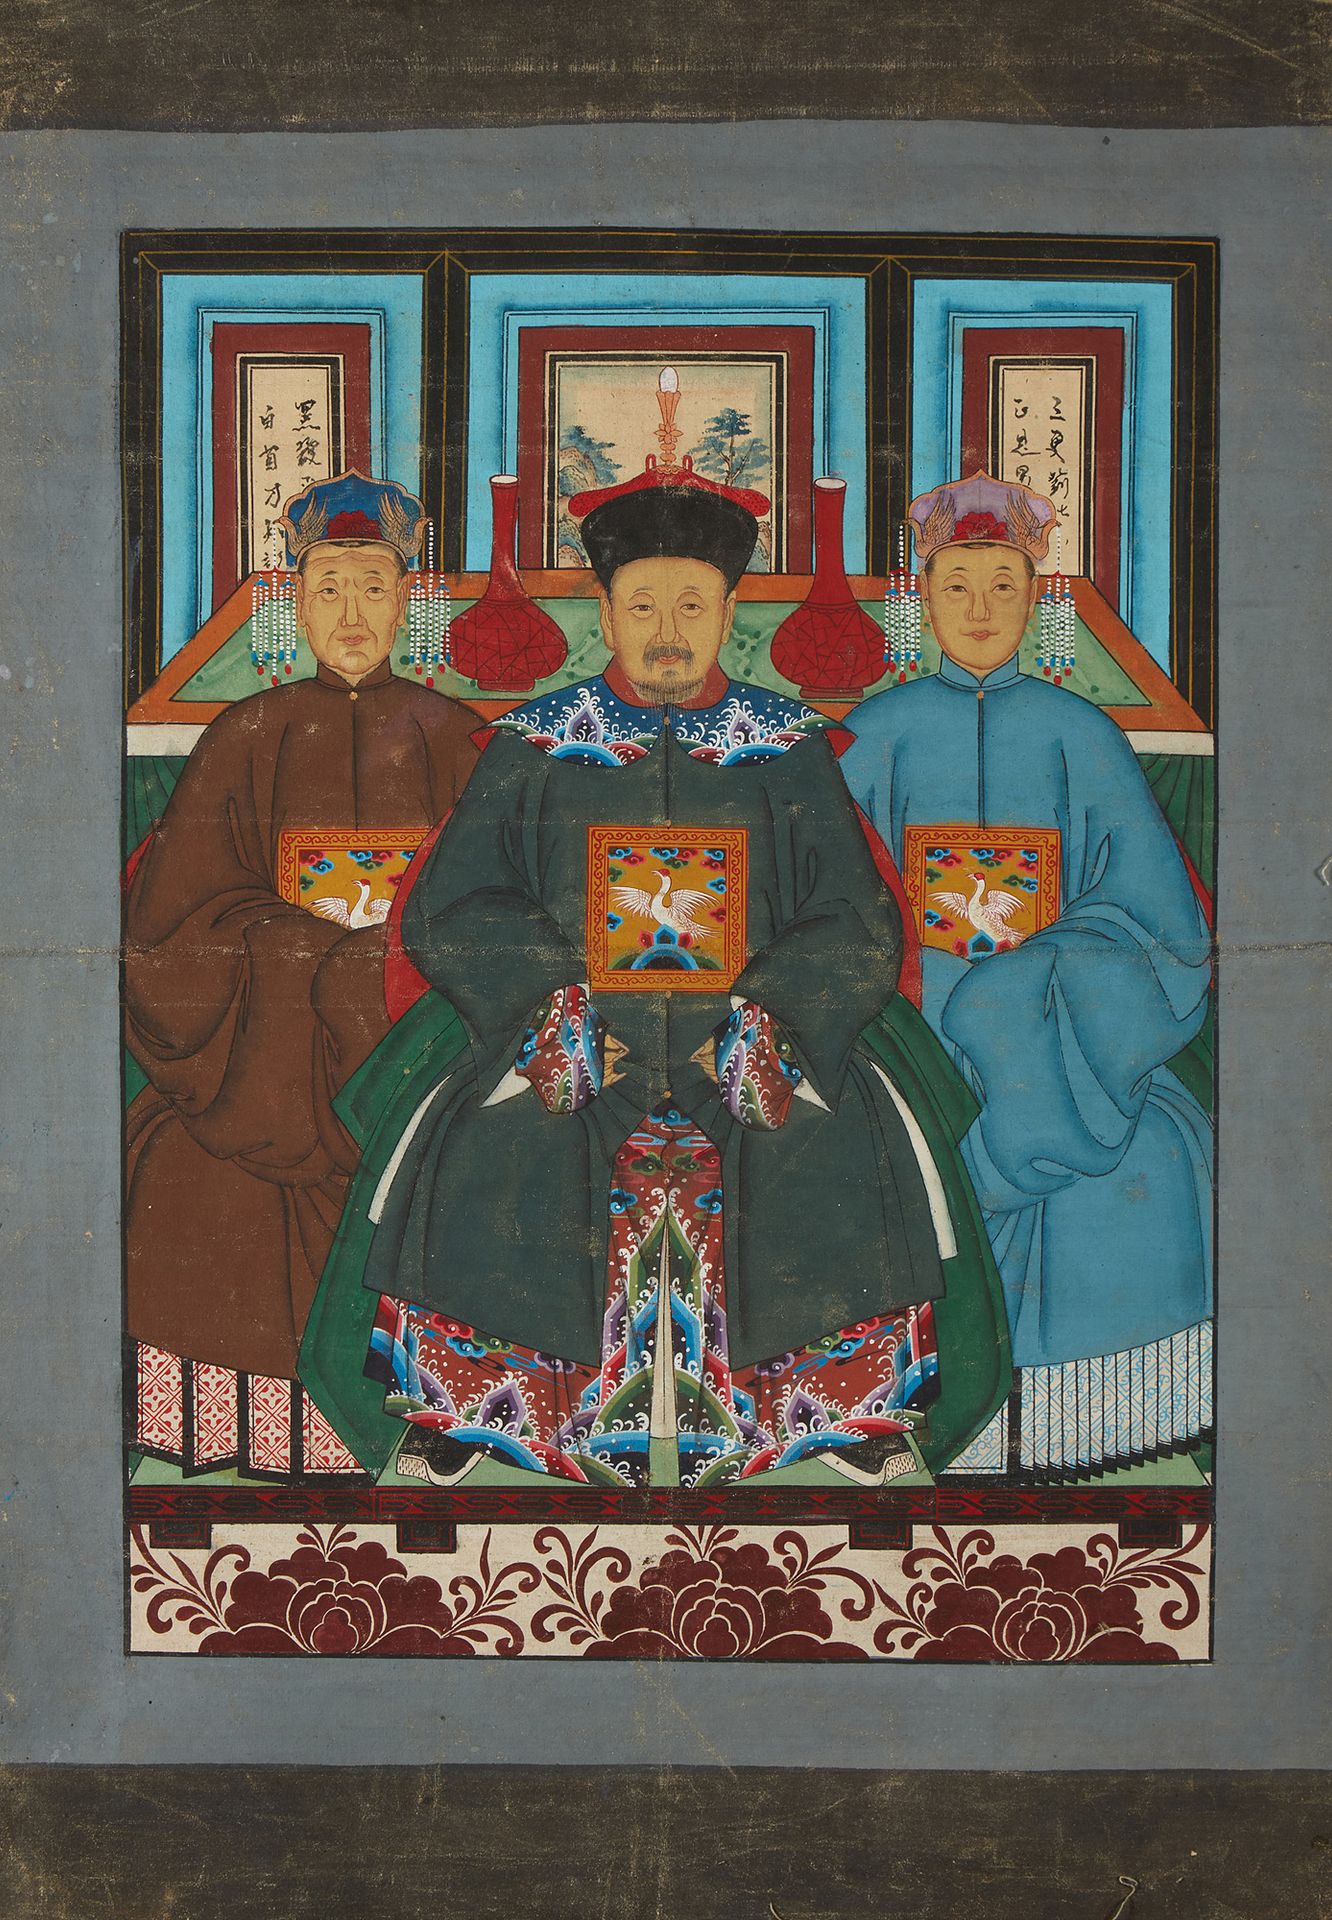 CHINE Portrait of three dignitaries.
Painting on fabric.
Dim.: 80 x 67cm